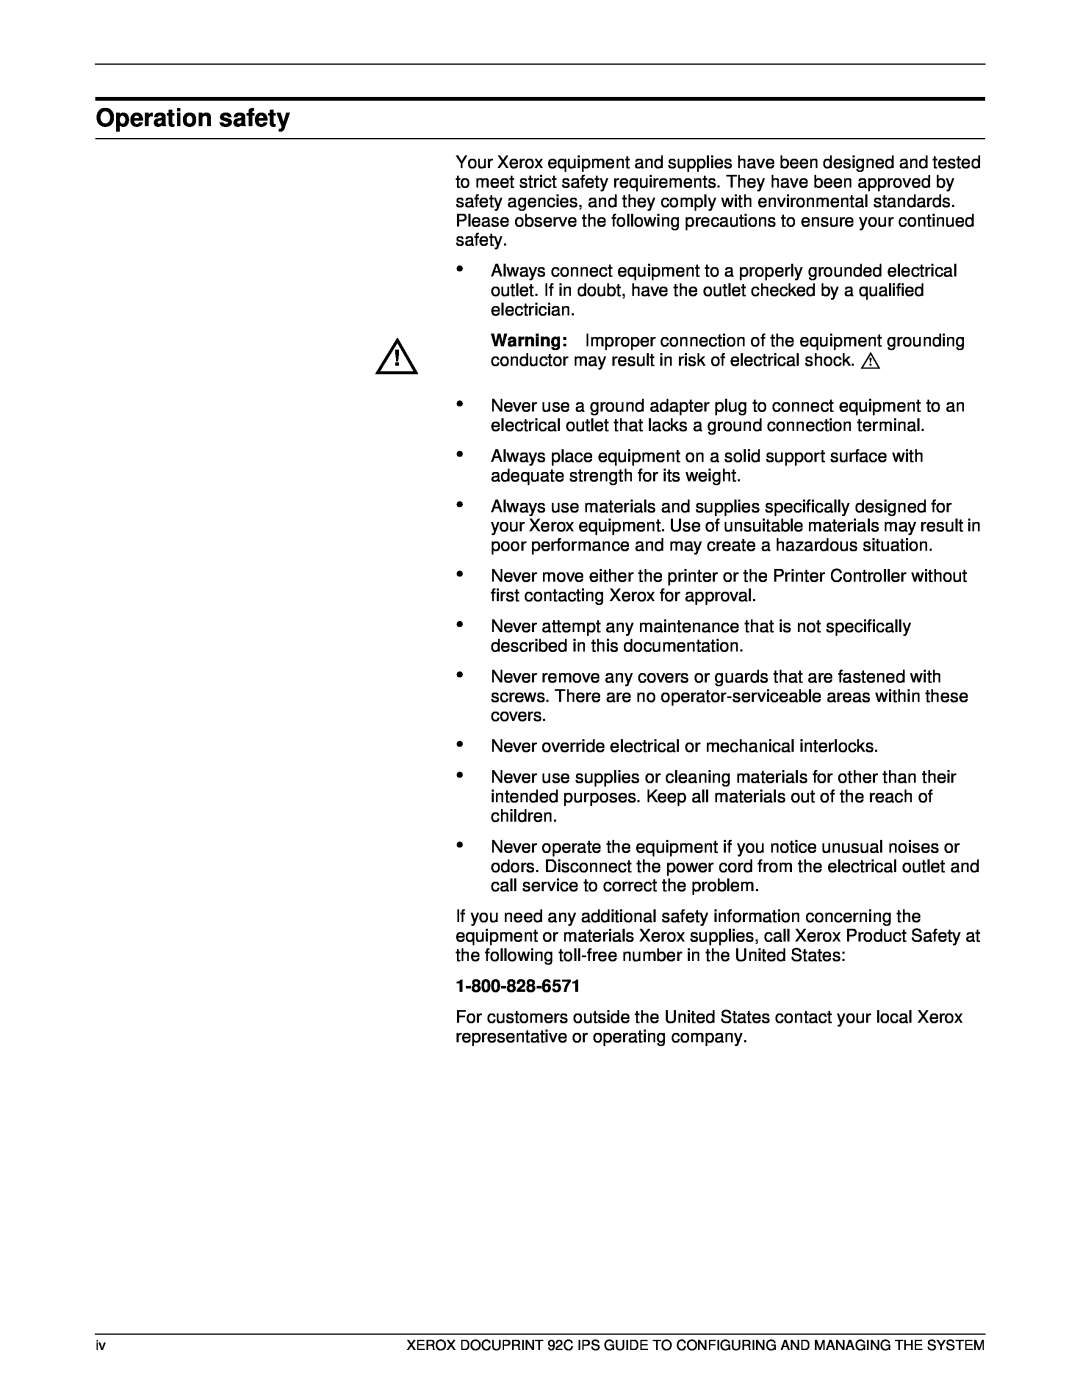 Xerox 92C IPS manual Operation safety 